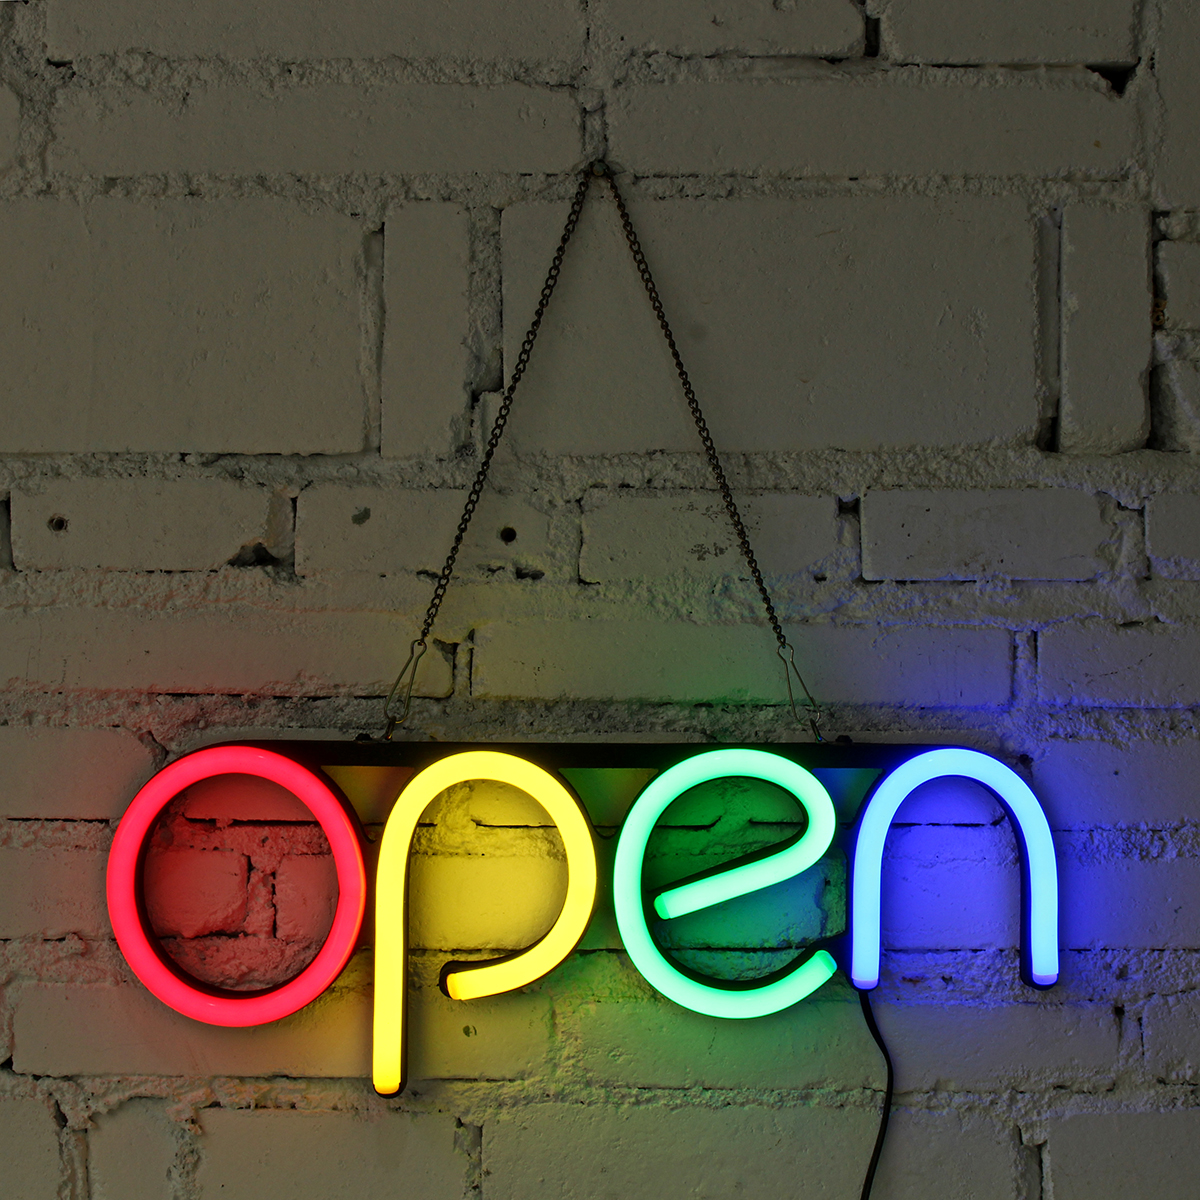 OPEN-LED-Neon-Sign-Tube-Light-Handmade-Visual-Artwork-Bar-Pub-Club-Hanging-Wall-Lamp-Decor-1437424-2